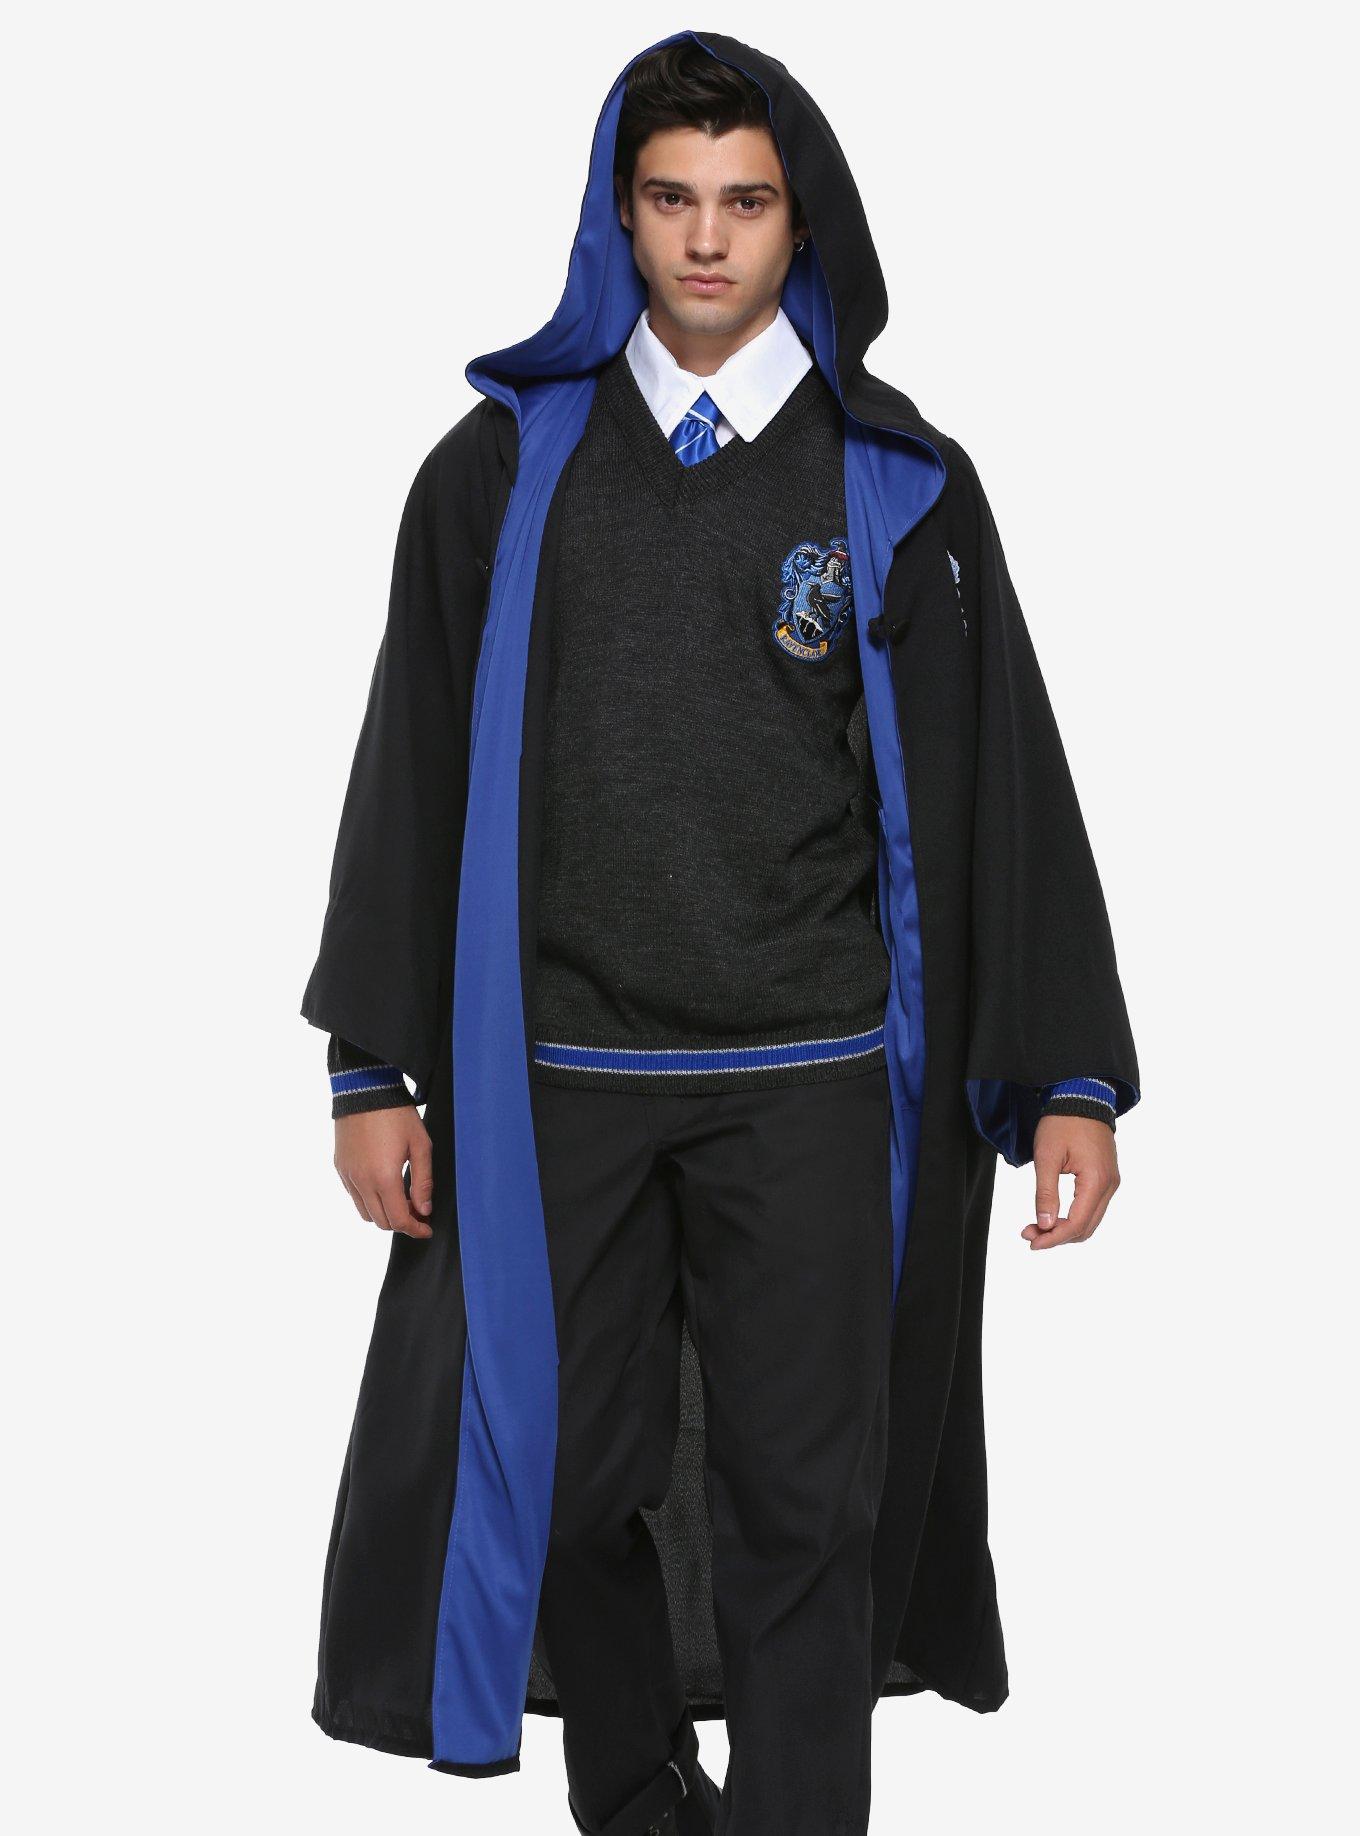 Cosplay - Harry Potter - Ravenclaw Uniform - Ravenclaw - M